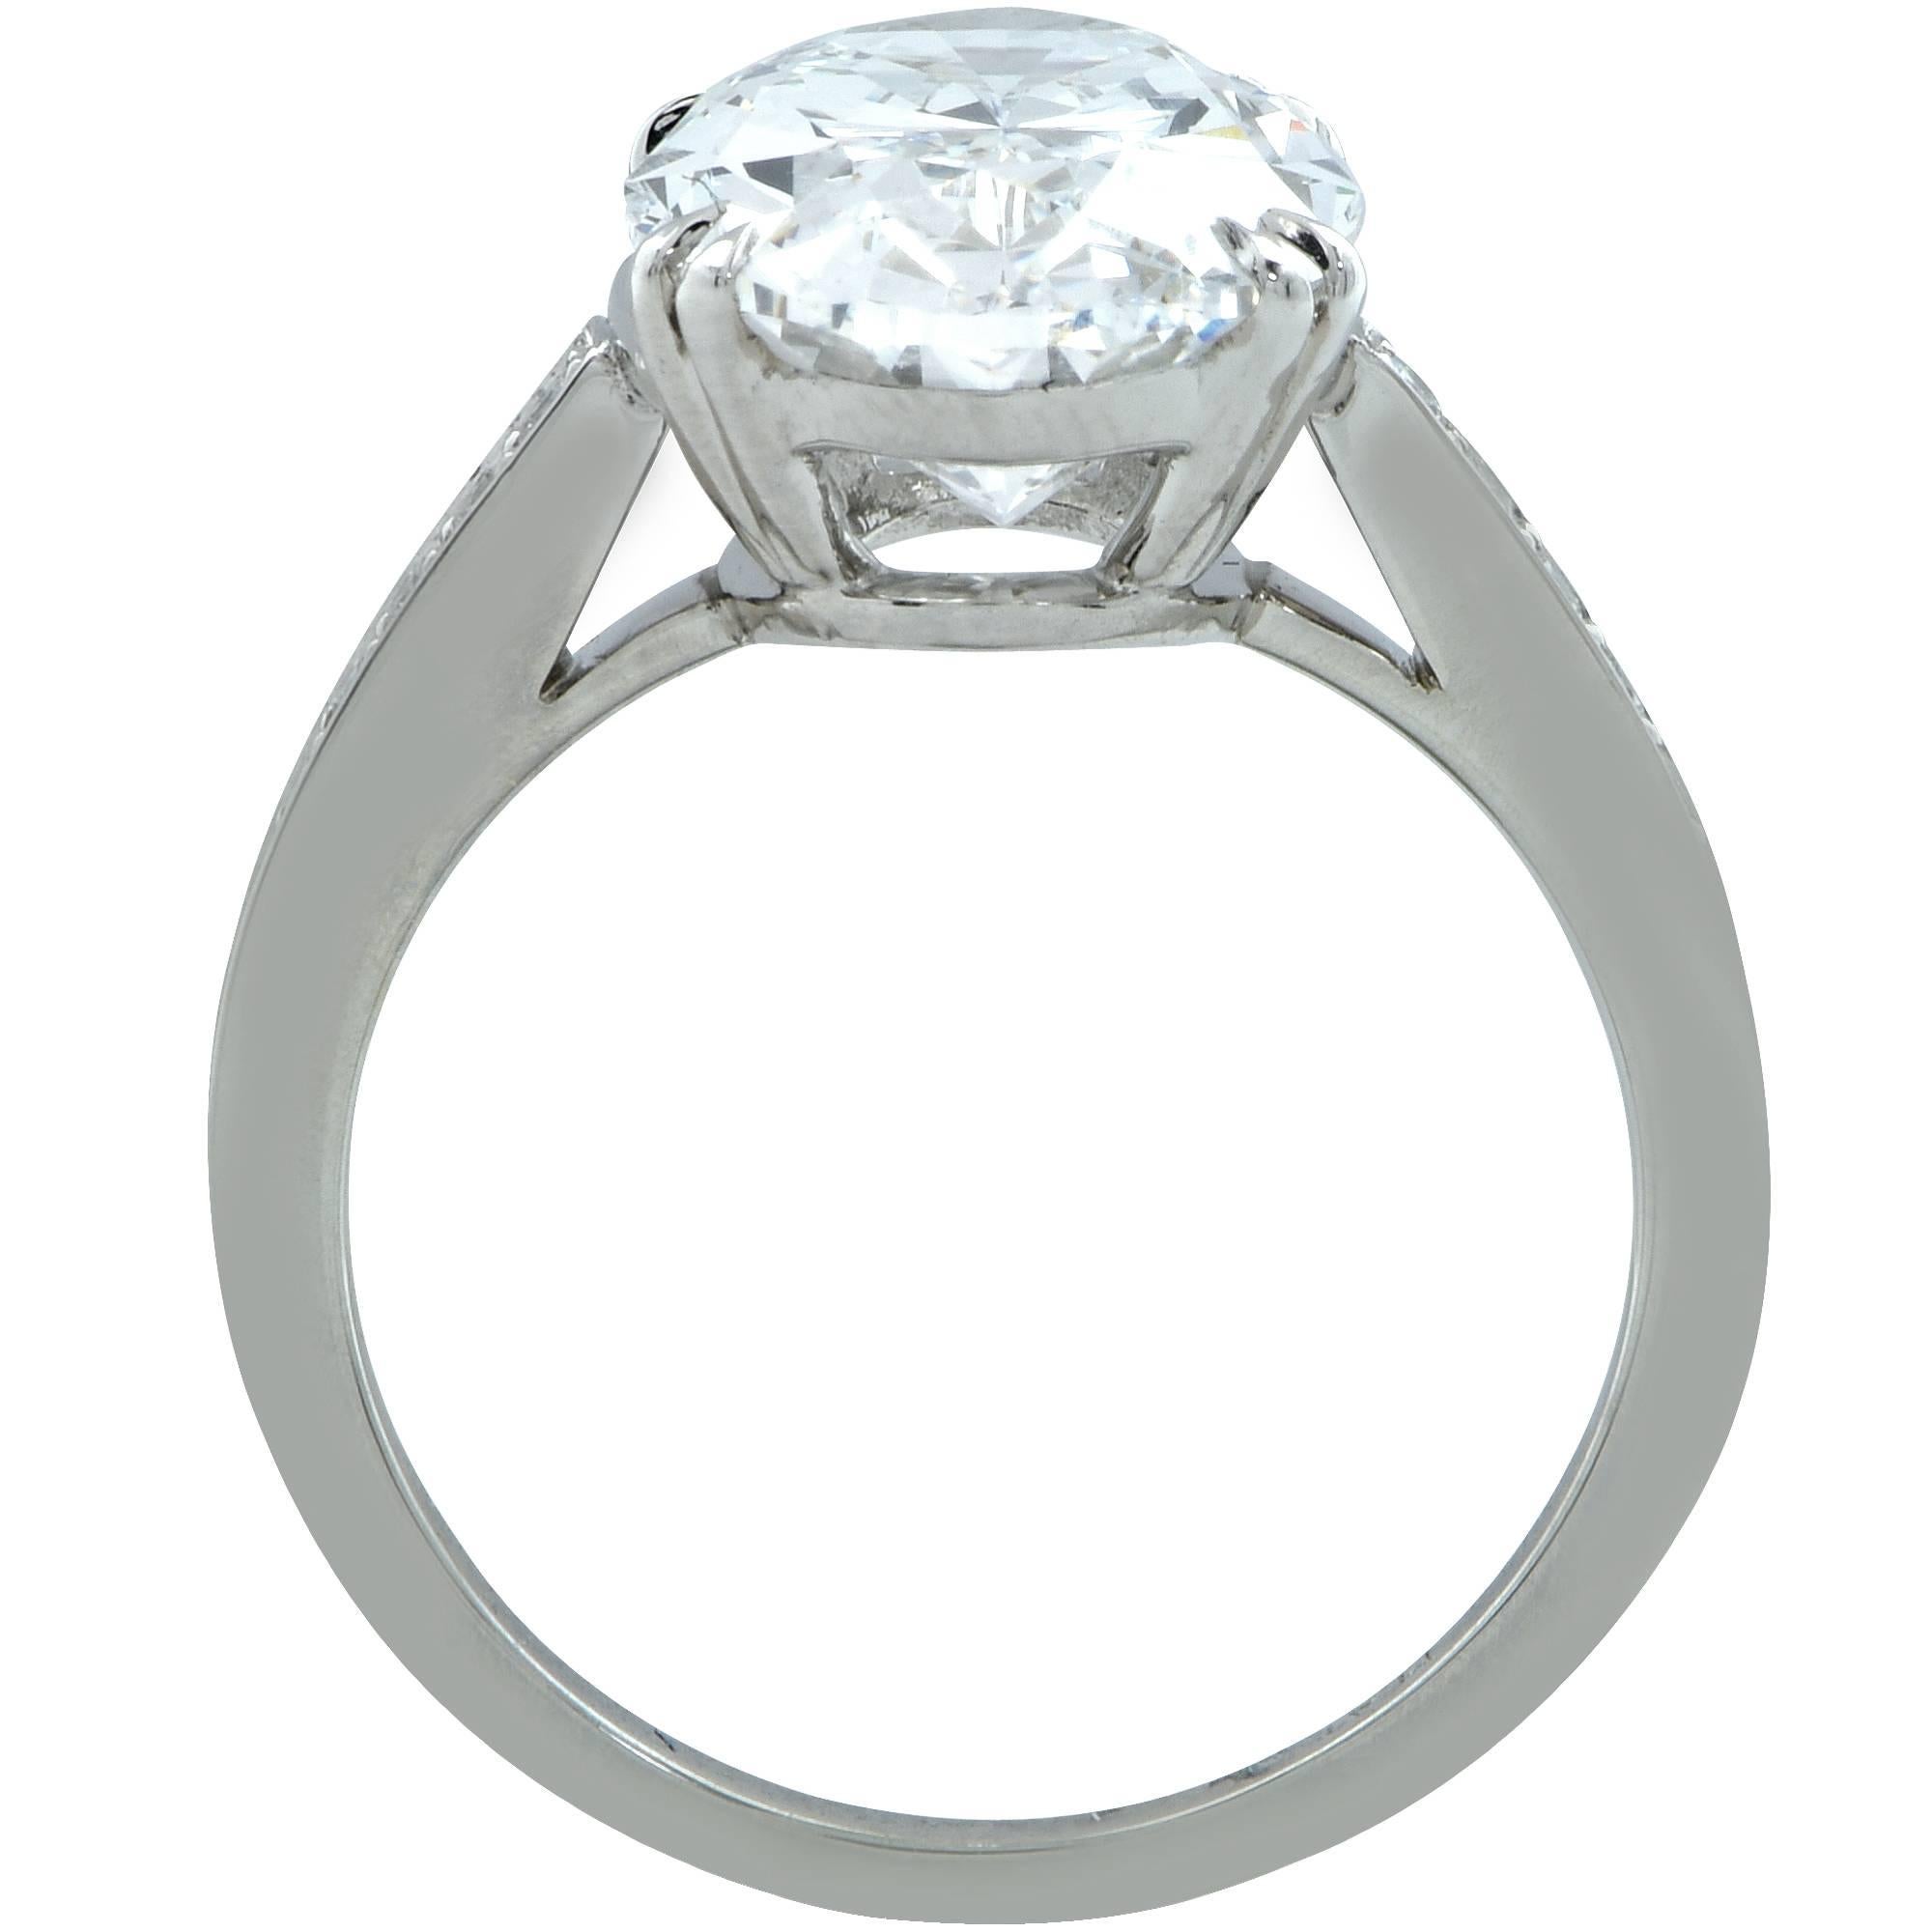 Modern Vivid Diamonds GIA Graded 6.15 Carat Oval Cut Diamond Engagement Ring